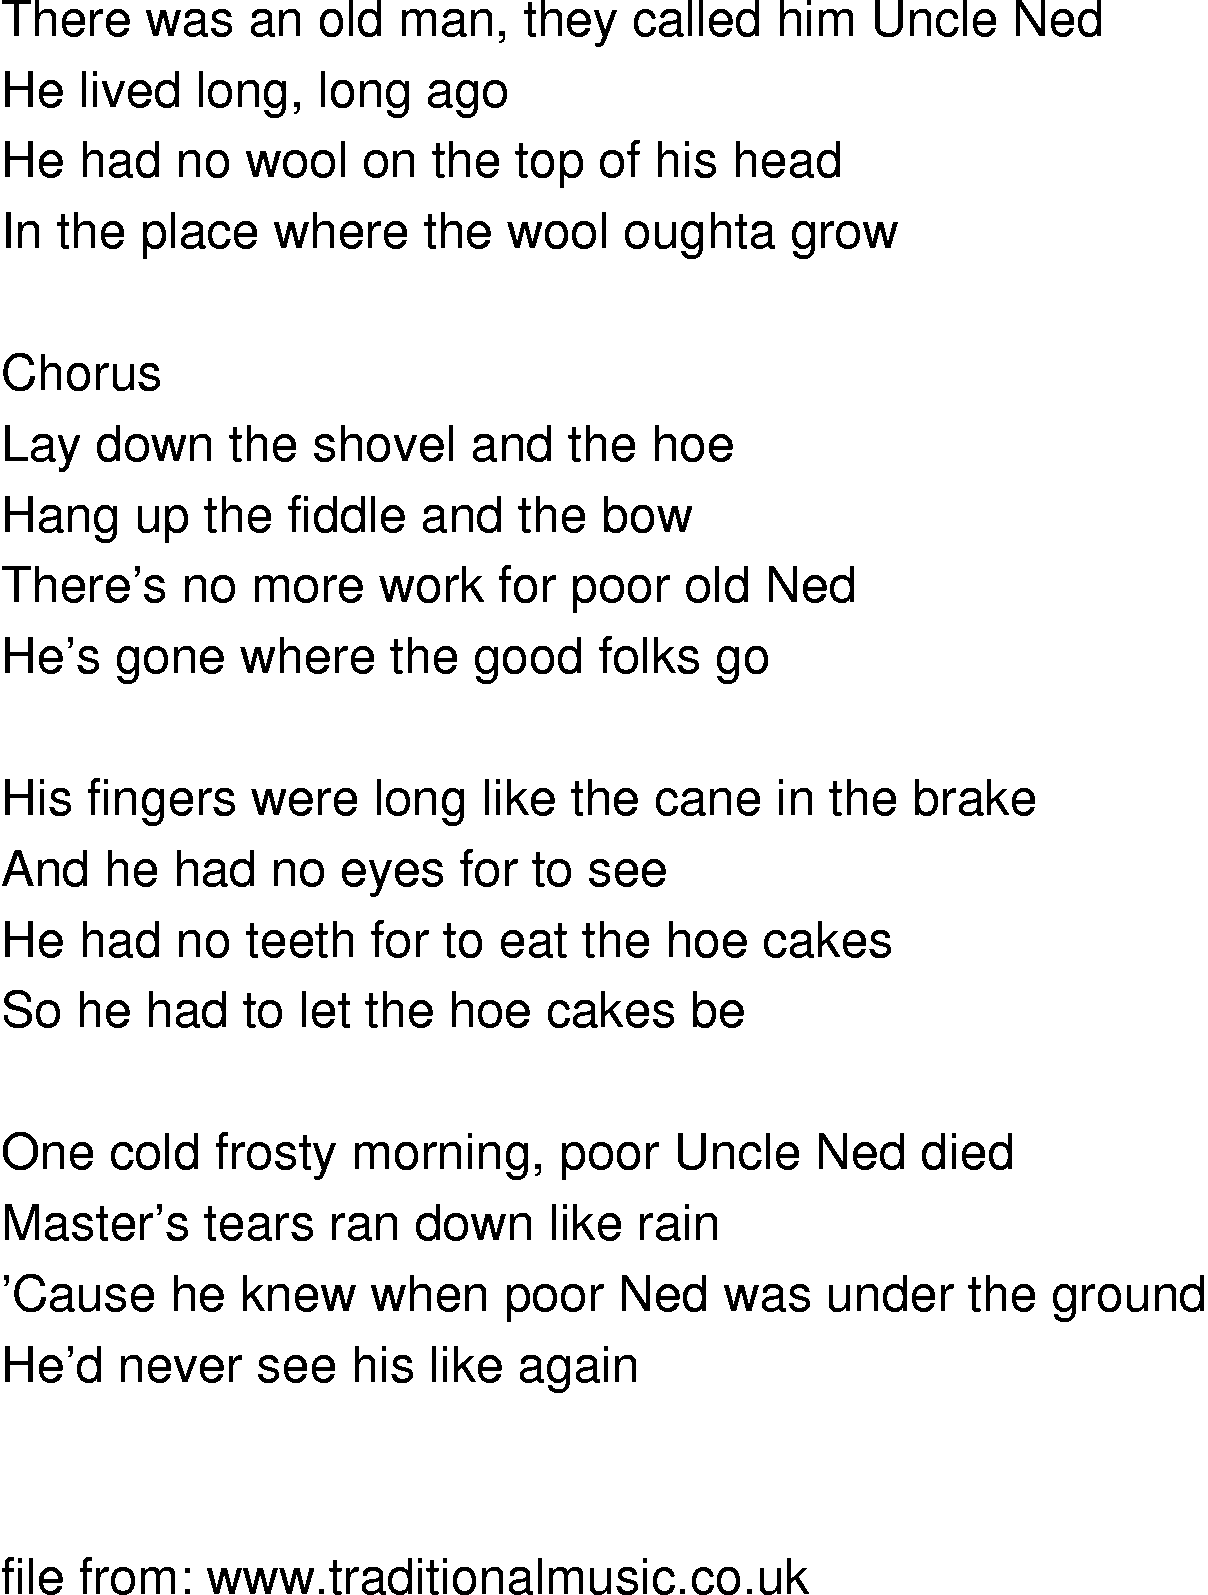 Old-Time (oldtimey) Song Lyrics - uncle ned